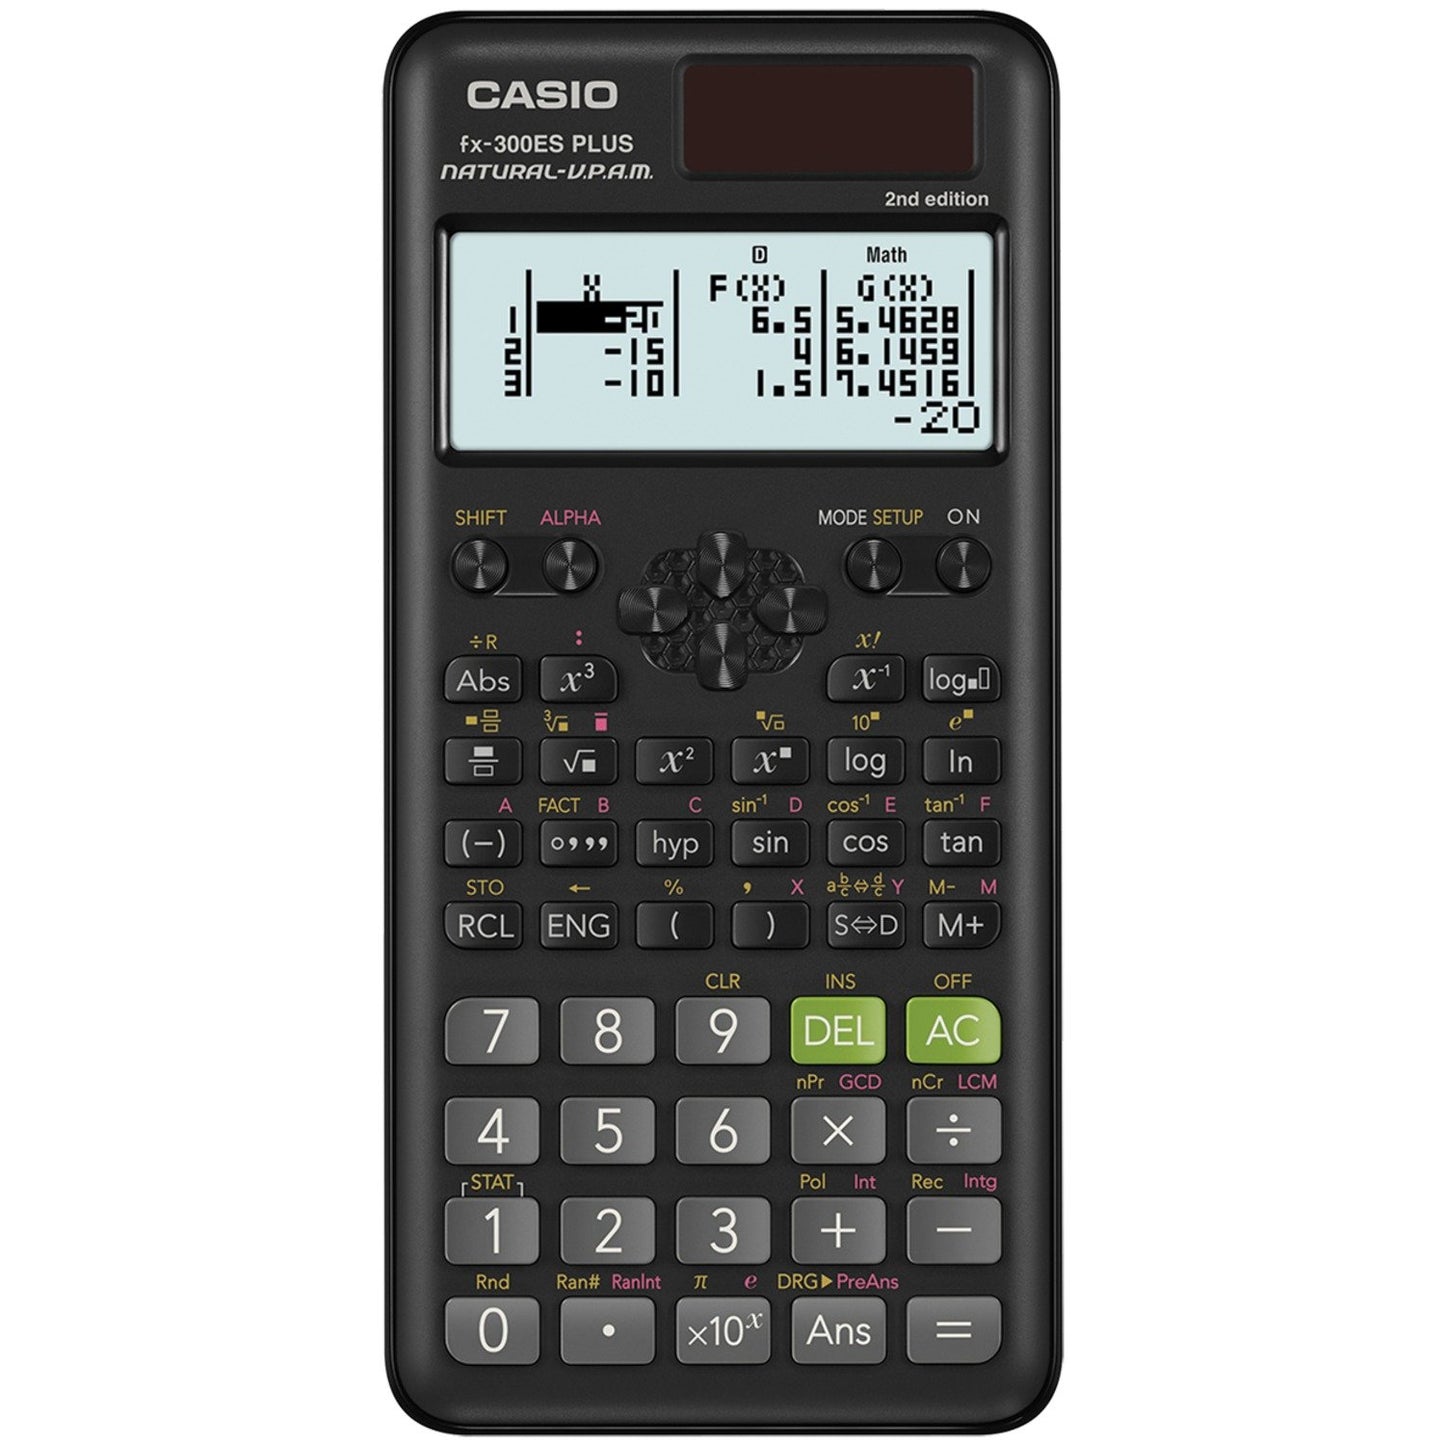 Casio FX-300ESPLS2-BLACK Scientific 2nd Edition Calculator (Black)